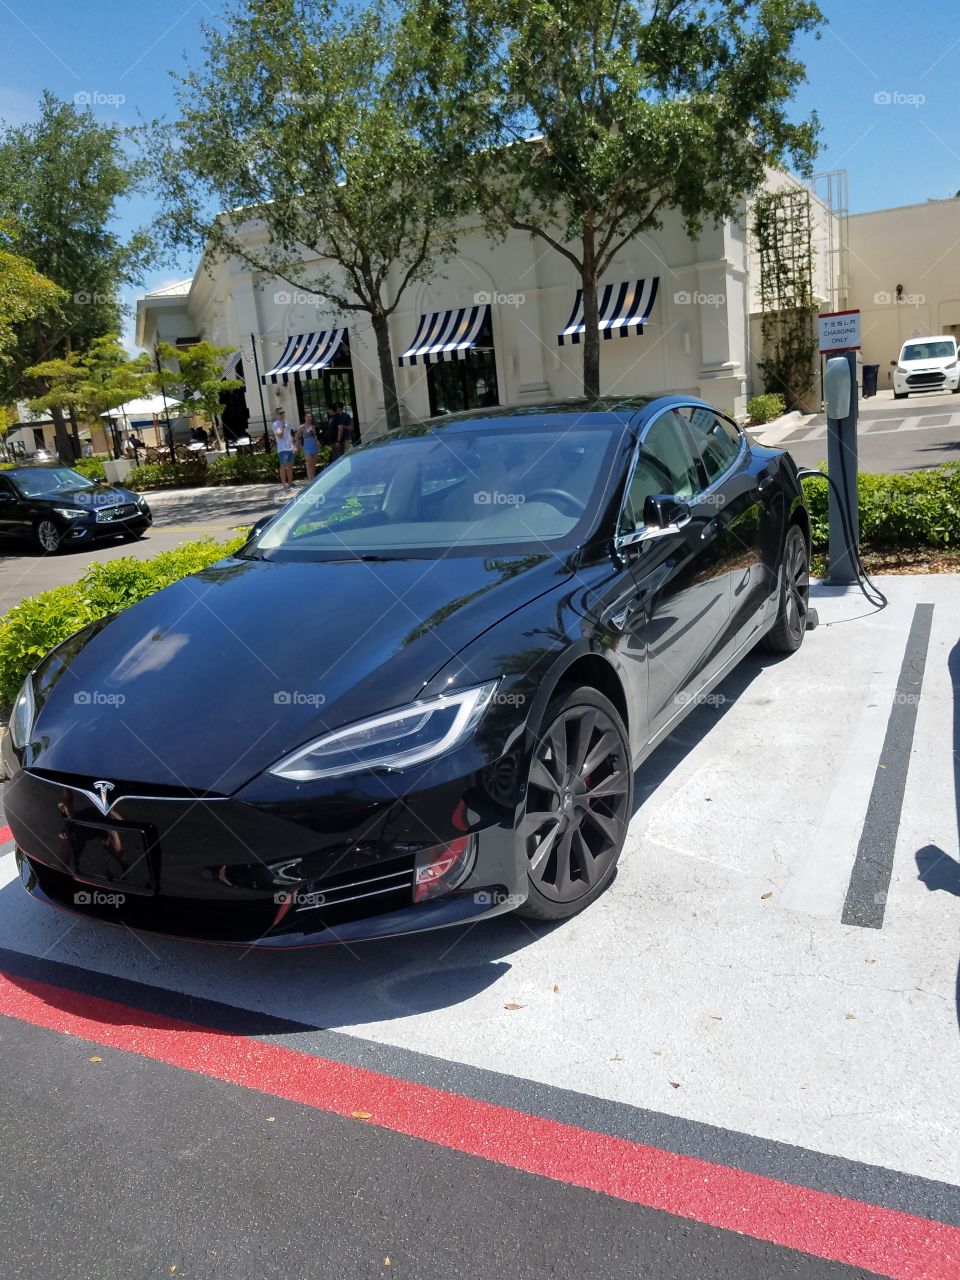 Tesla hybrid